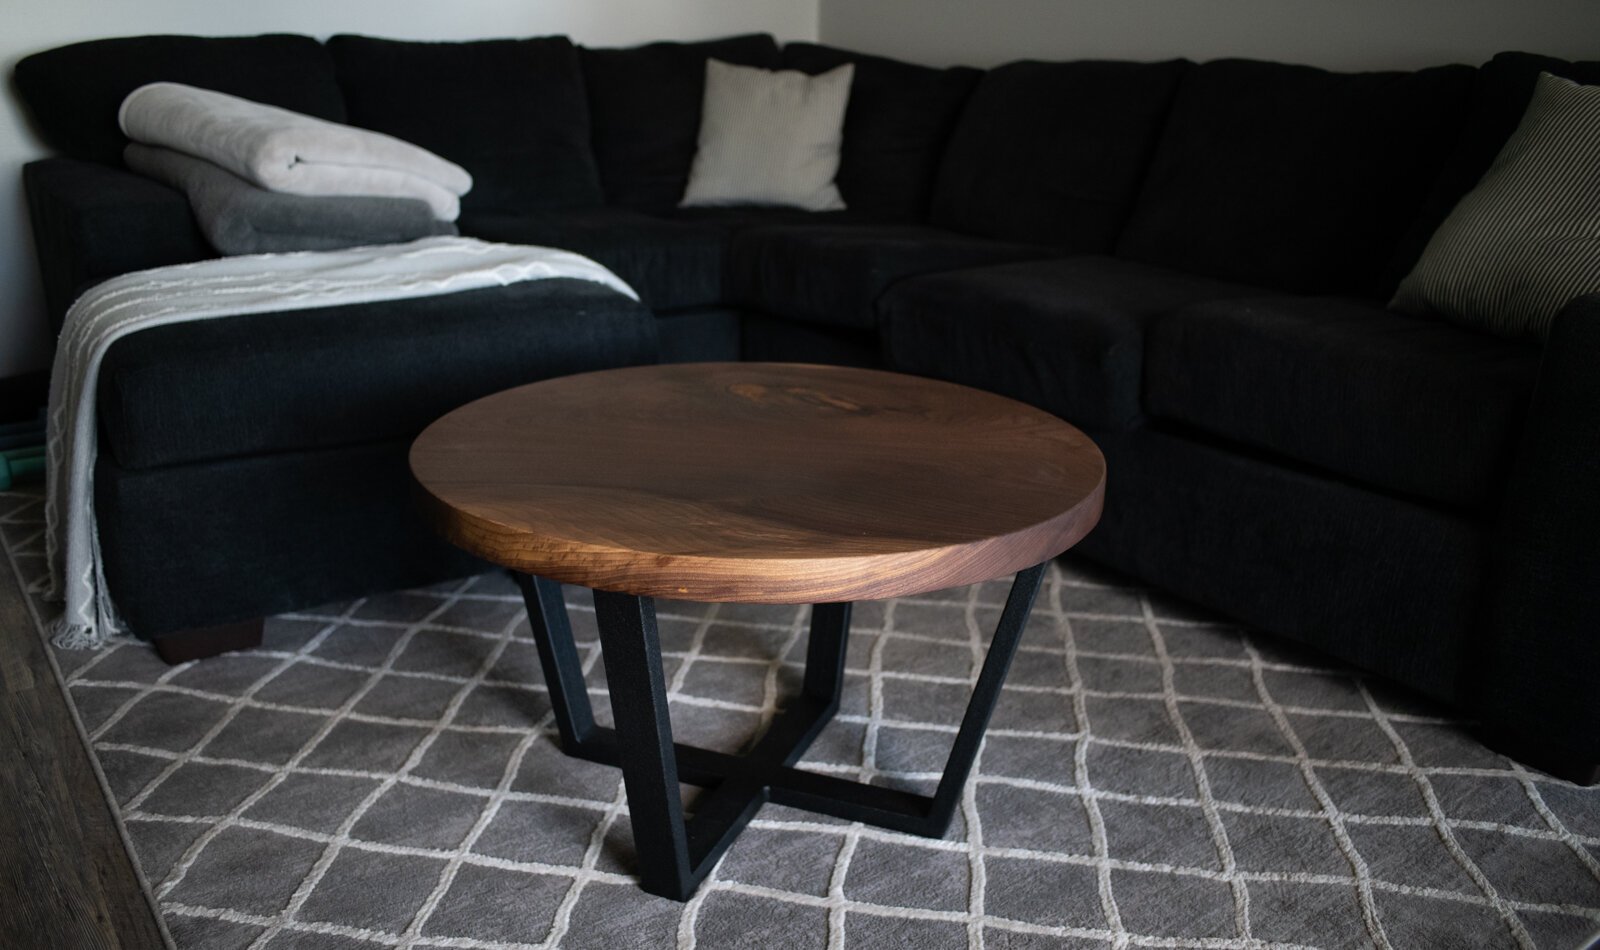 Lee Hoffmeier's first coffee table in his home.